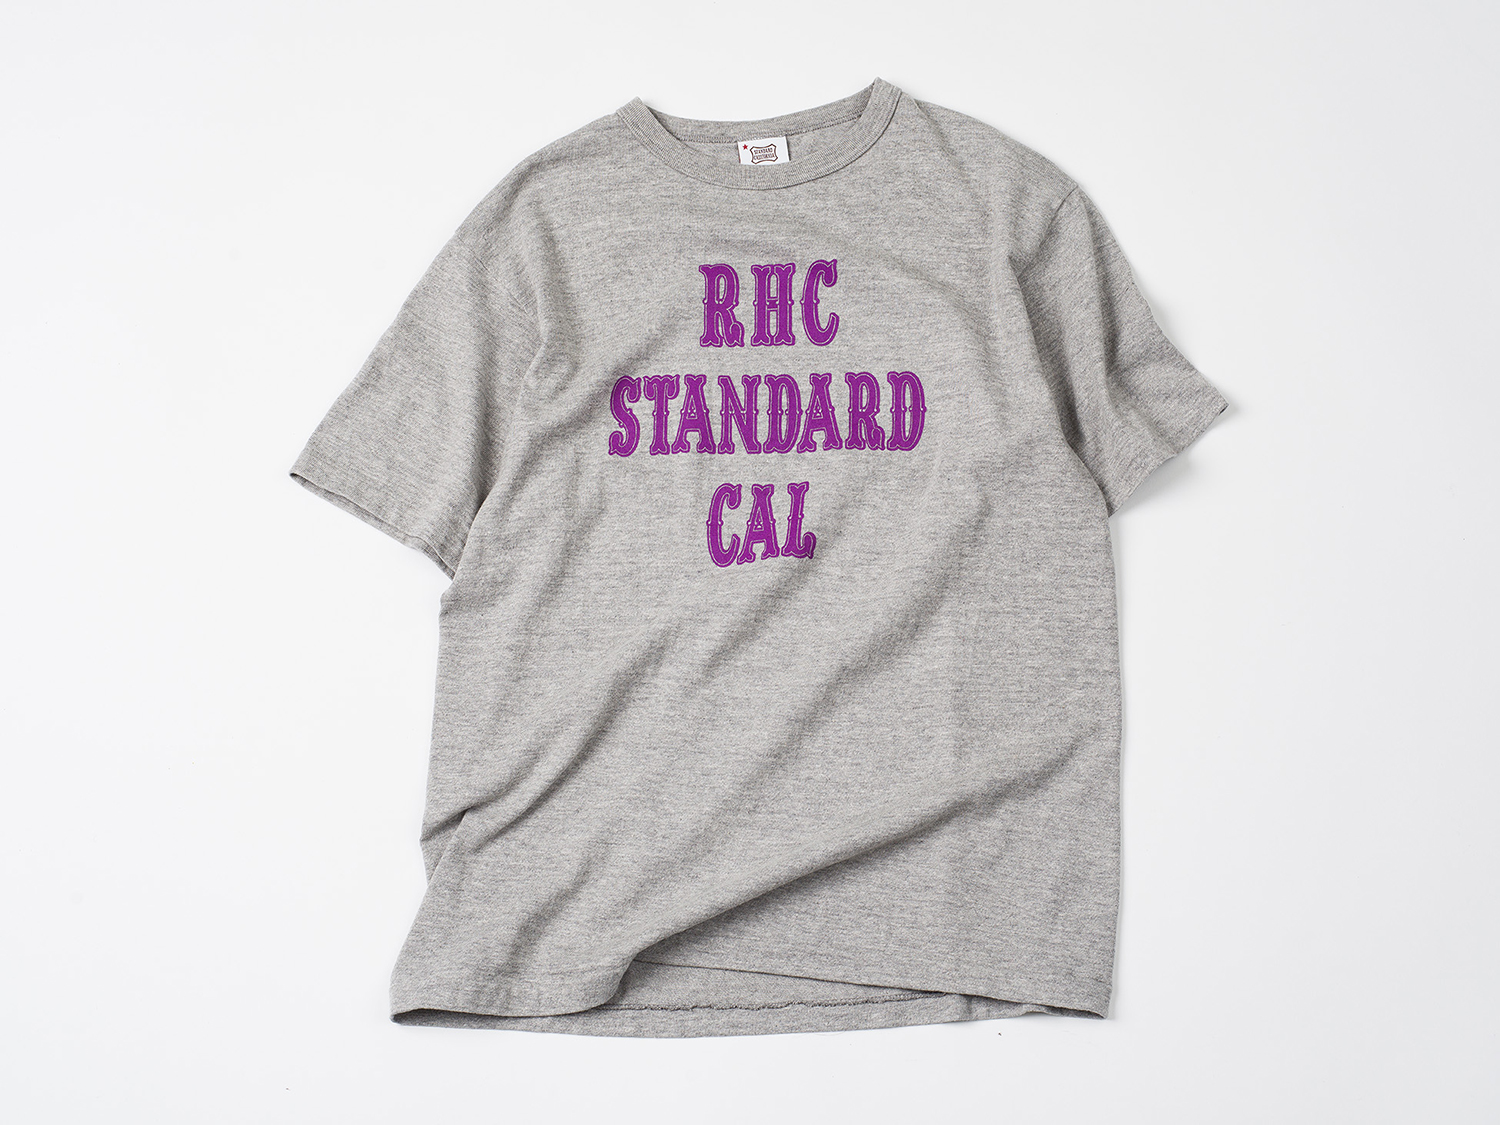 Standard California for RHC Ron Hermanの新作アイテムが5月14日に発売